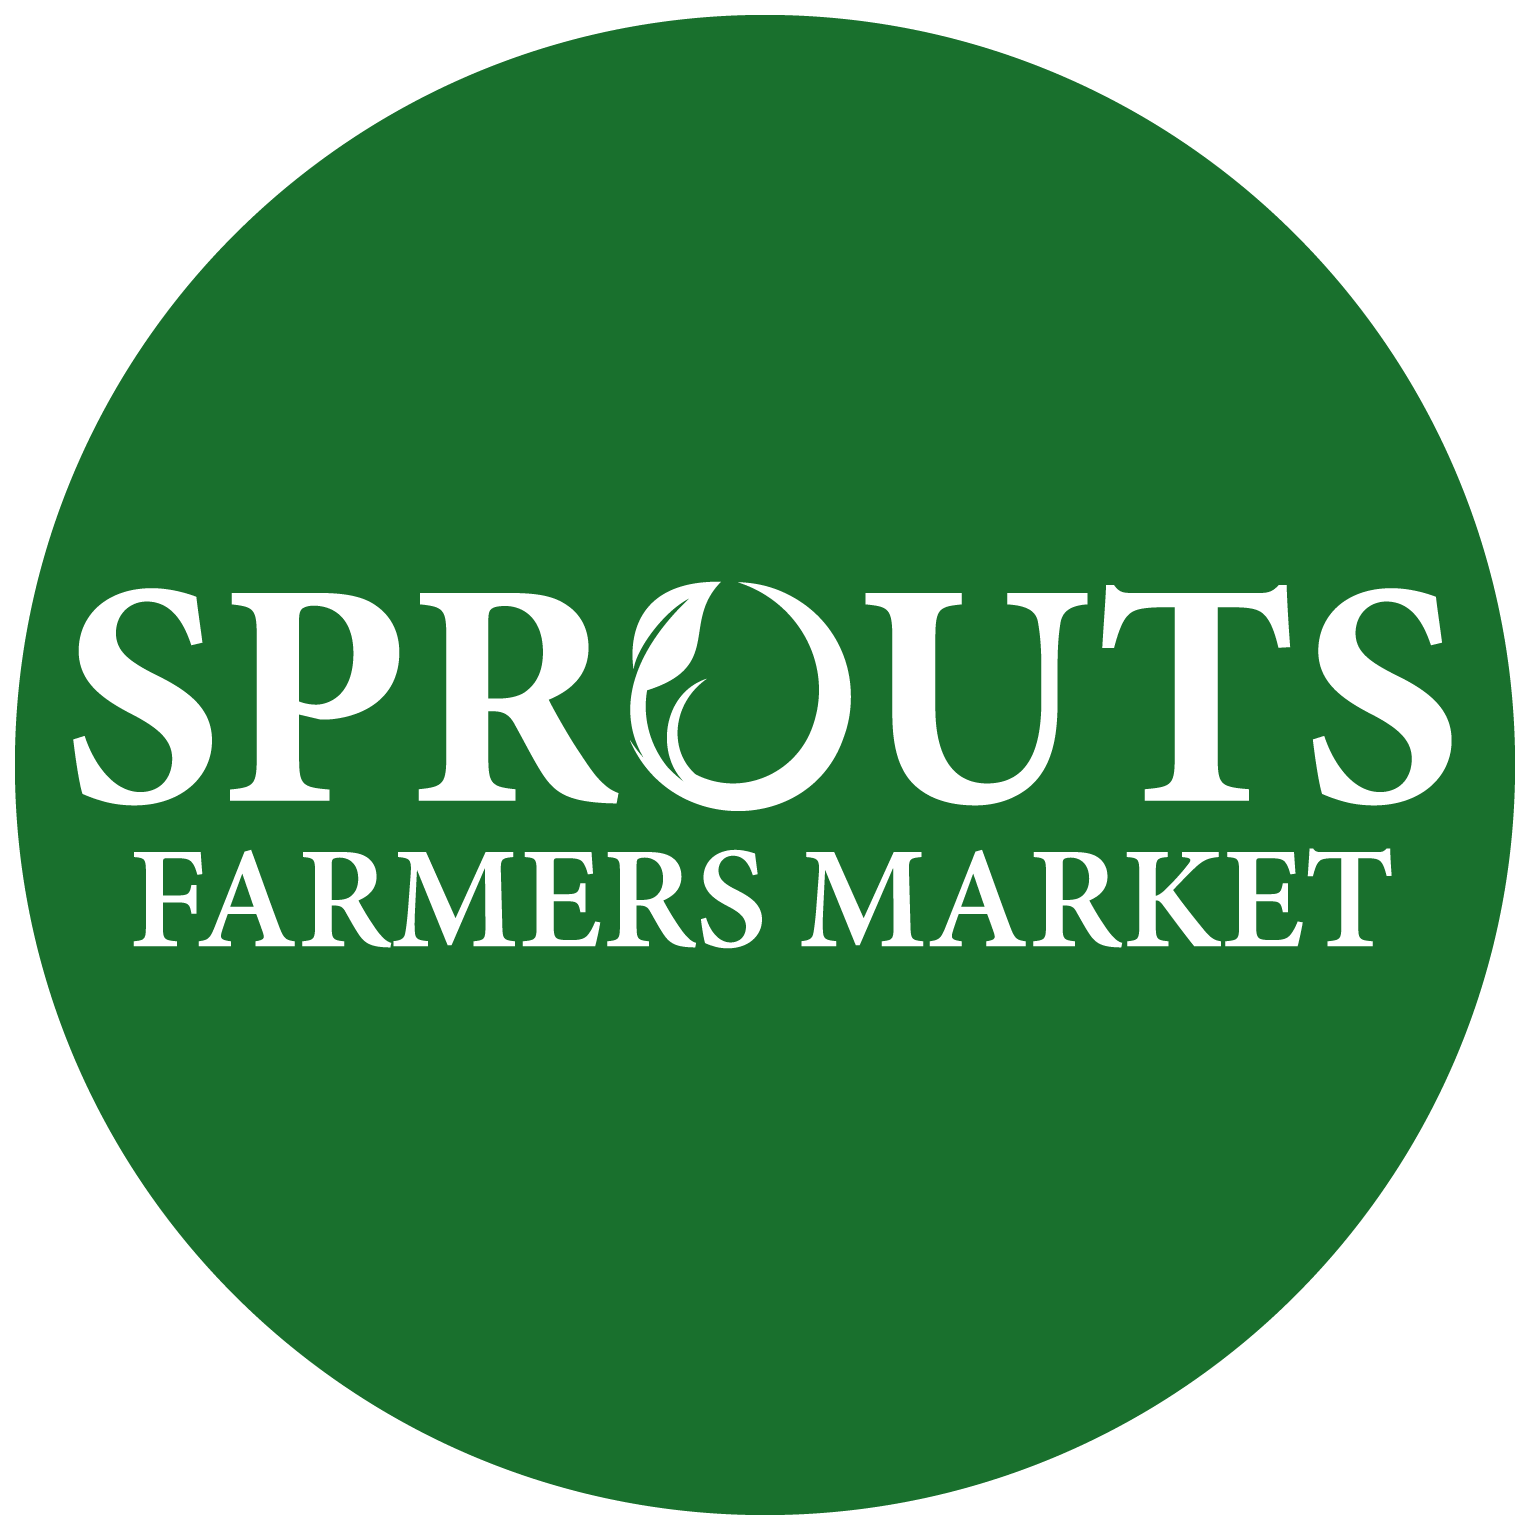 Sprouts Farmers Market brand logo